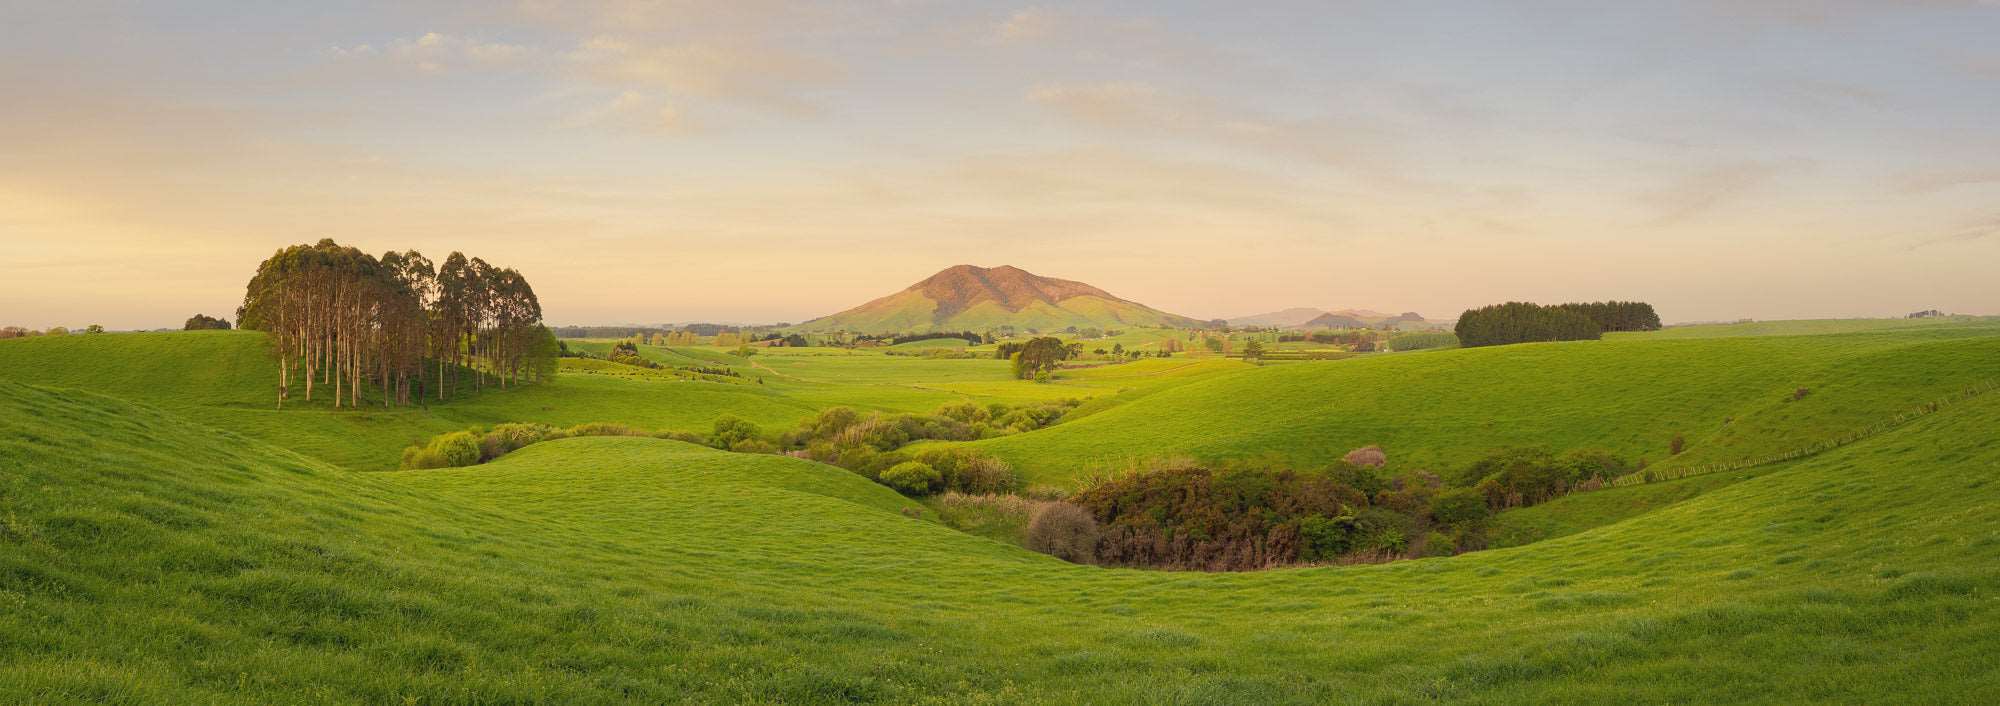 Fiery Fields - Mount Kakepuku - by Award Winning New Zealand Landscape Photographer Stephen Milner